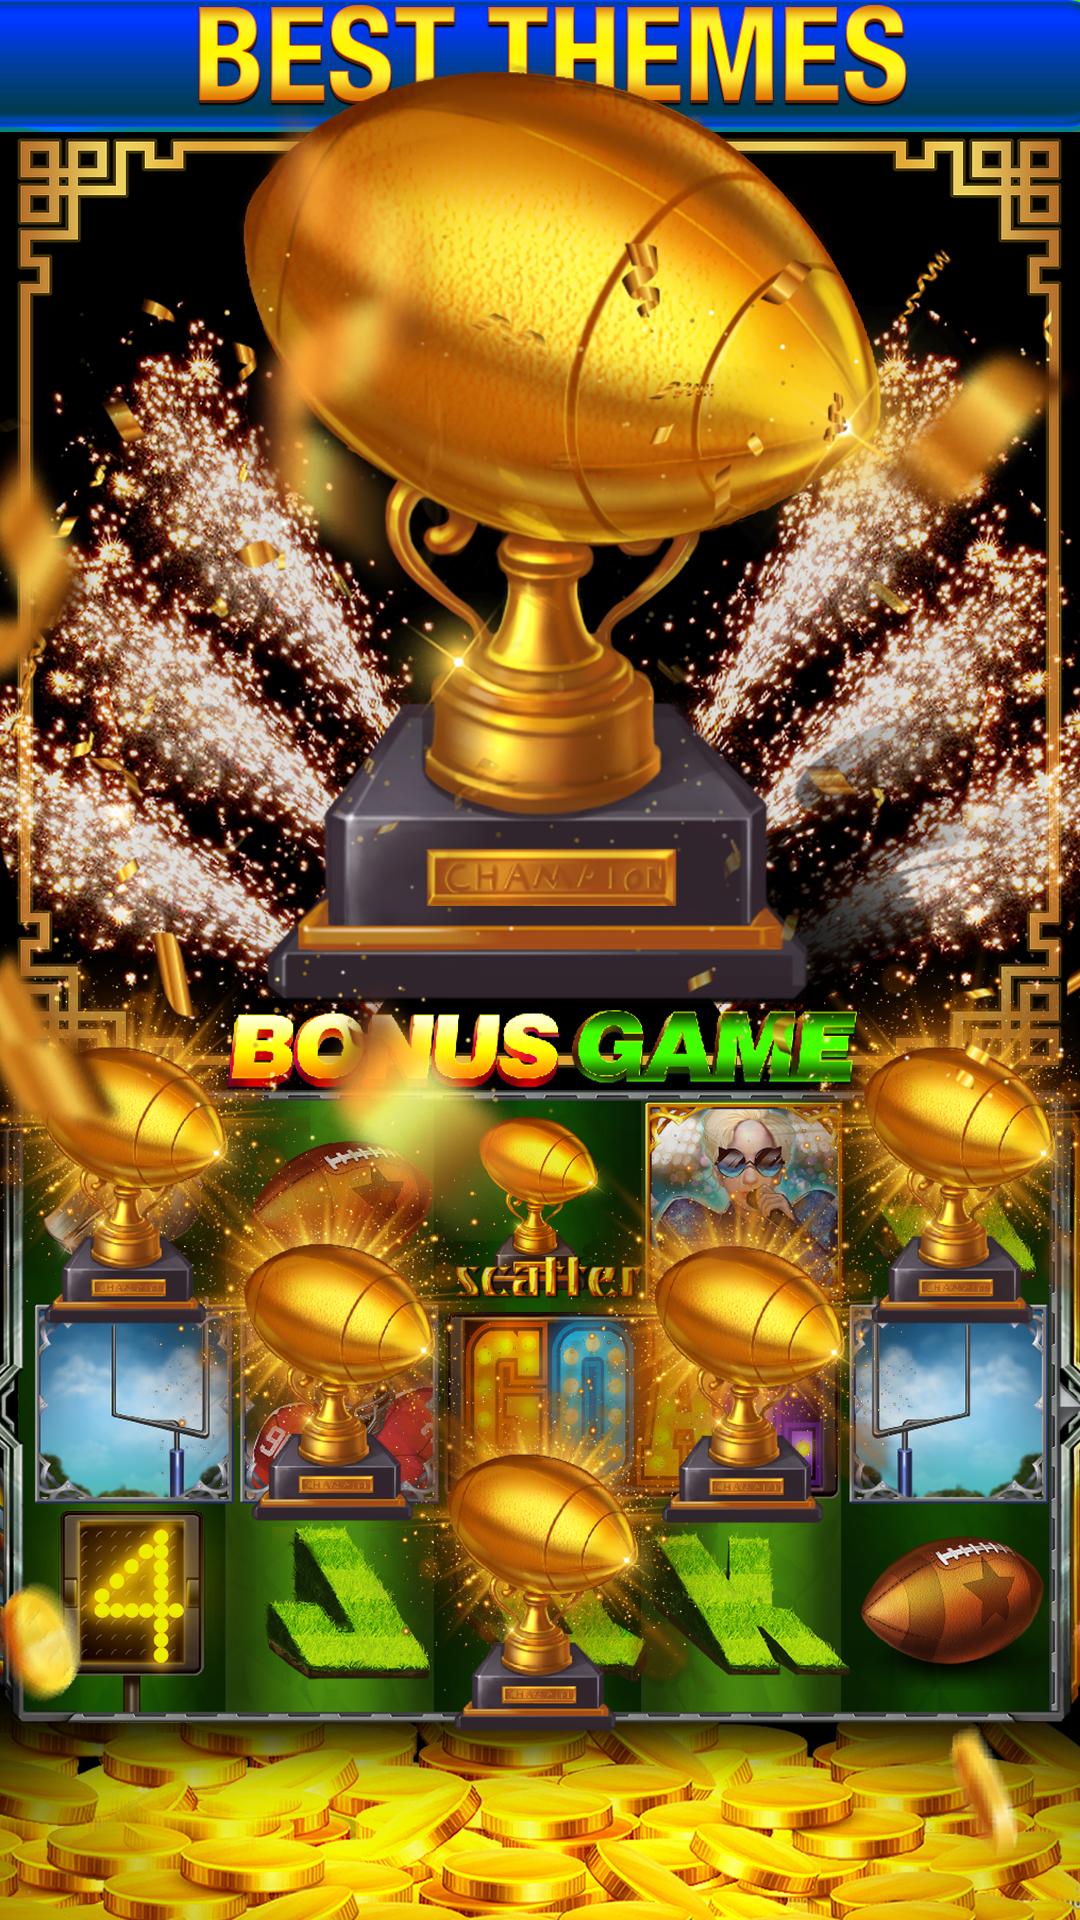 Free Online Mobile Casino Slot Games